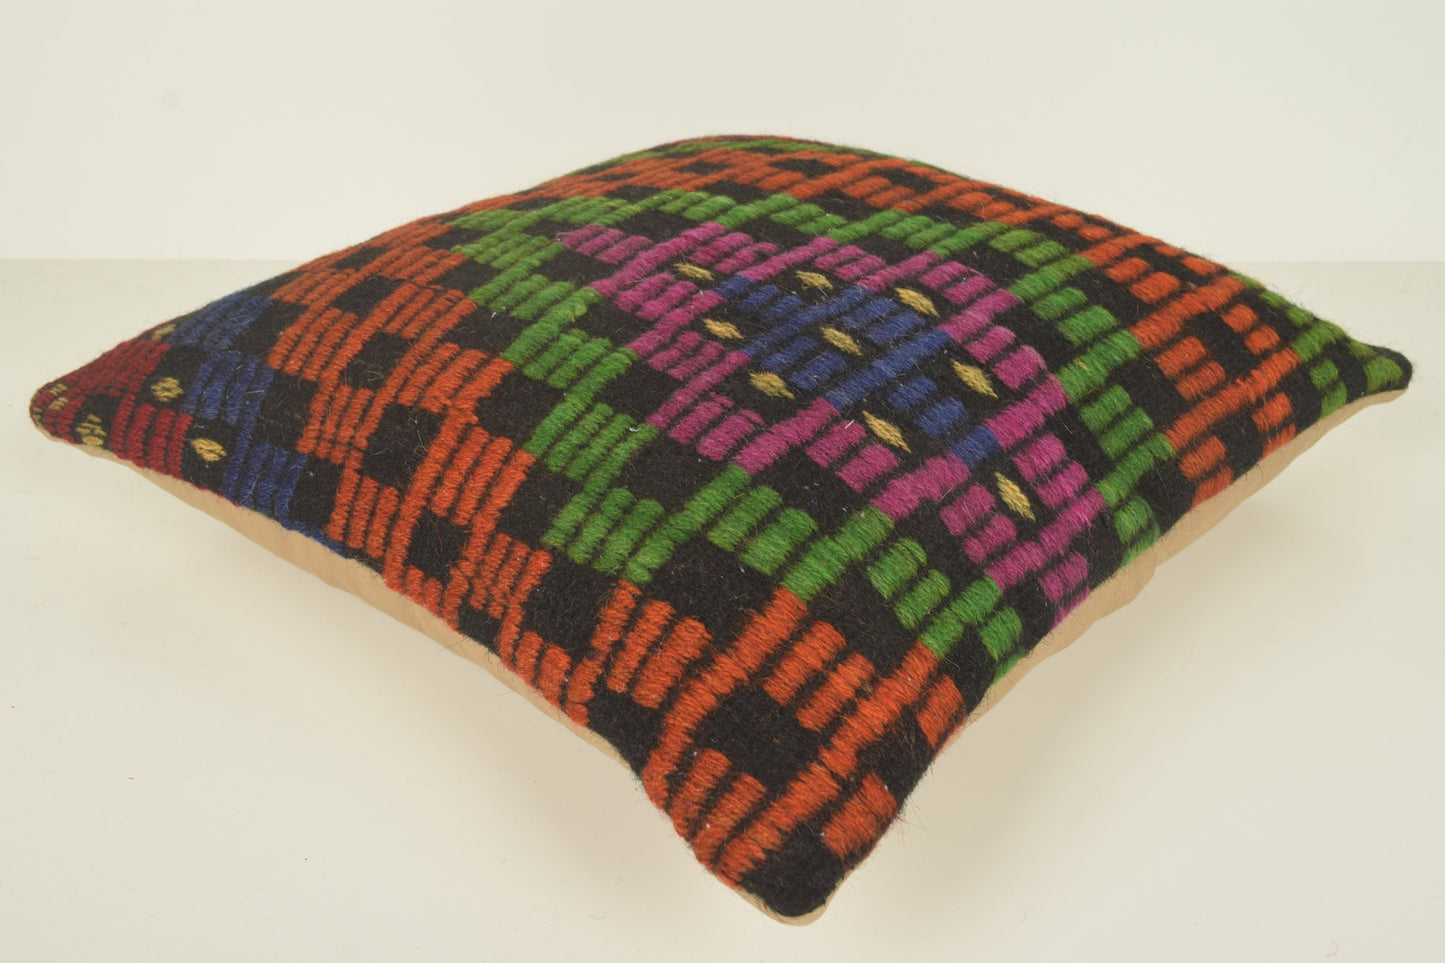 Turkish Rug Throw Pillows C01426 18x18 Christmas Crochet Excellent